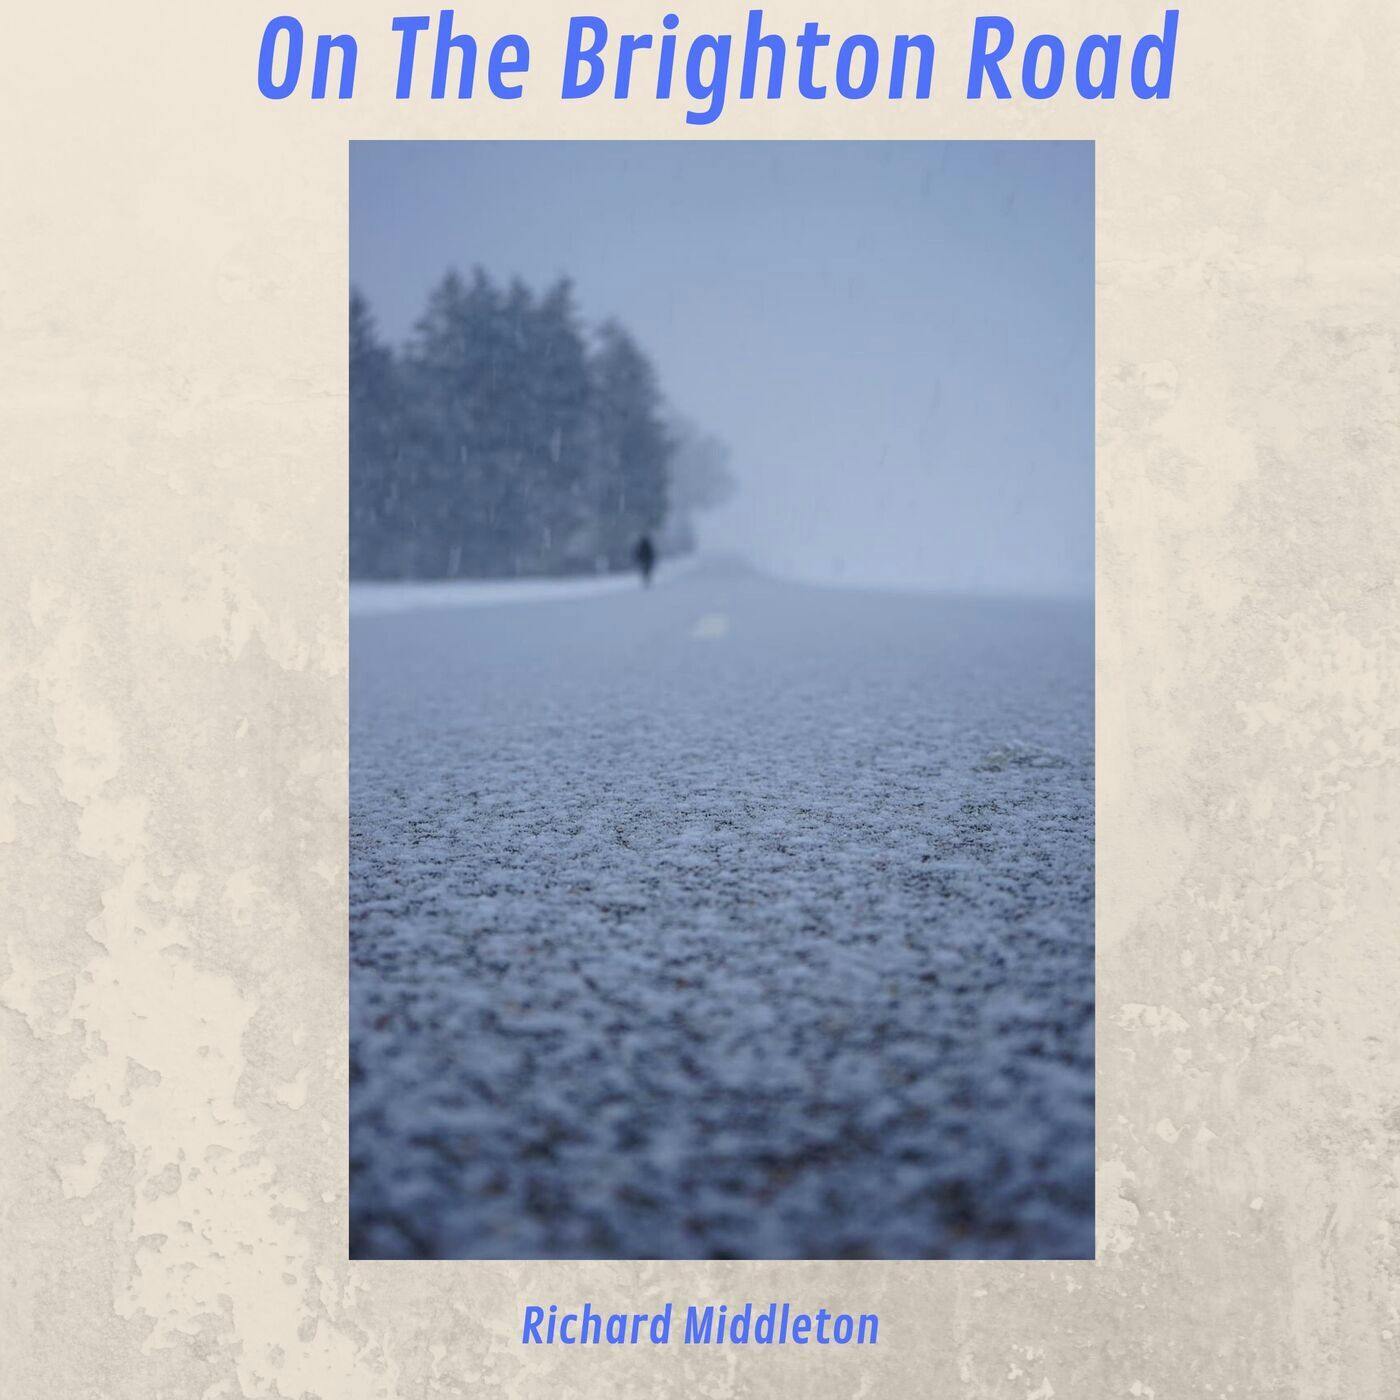 Episode 29: On The Brighton Road by Richard Middleton